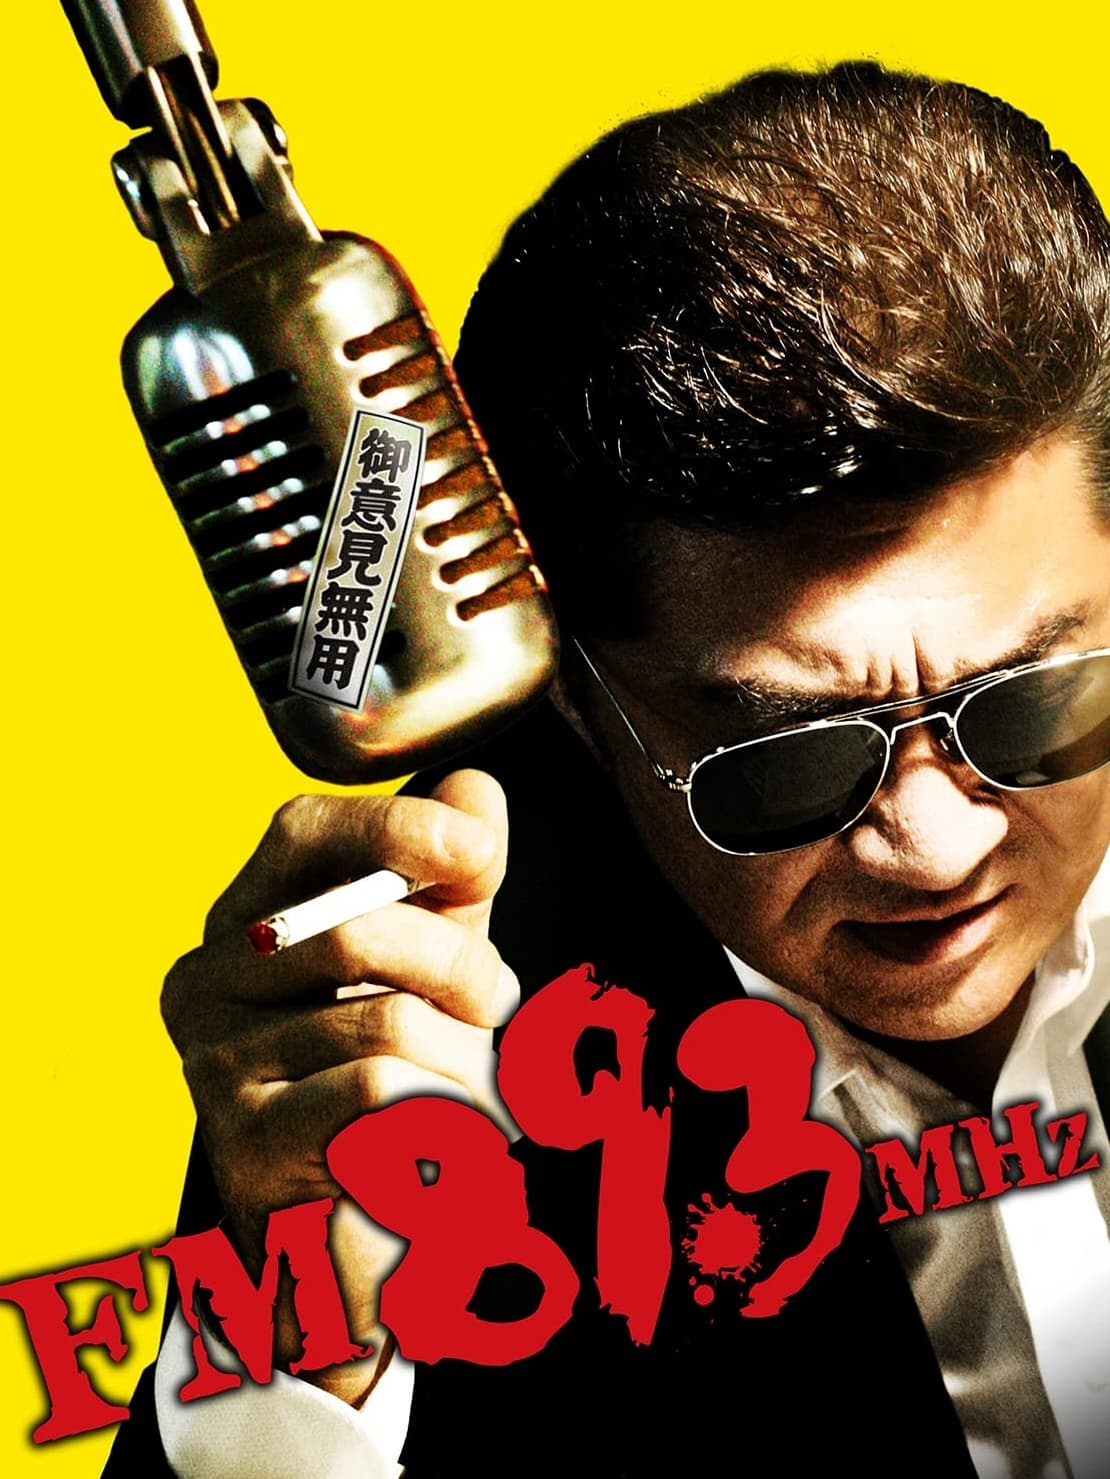 FM89.3MHz